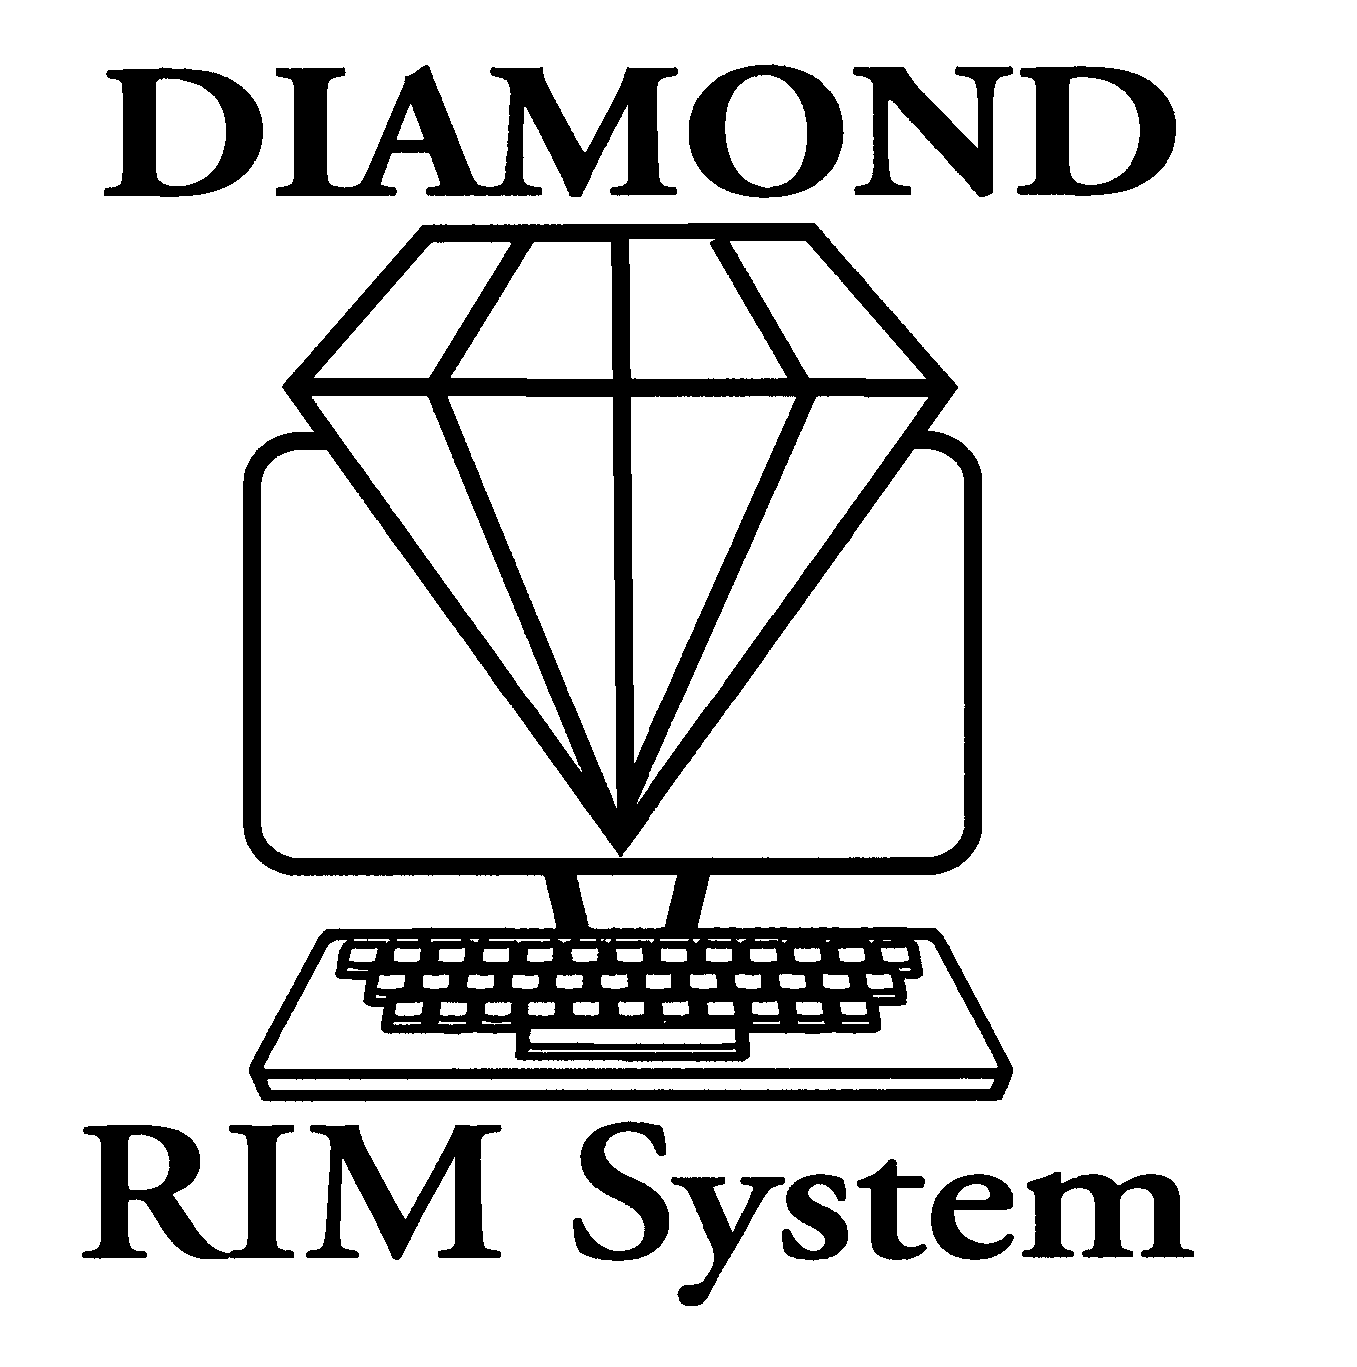  DIAMOND RIM SYSTEM